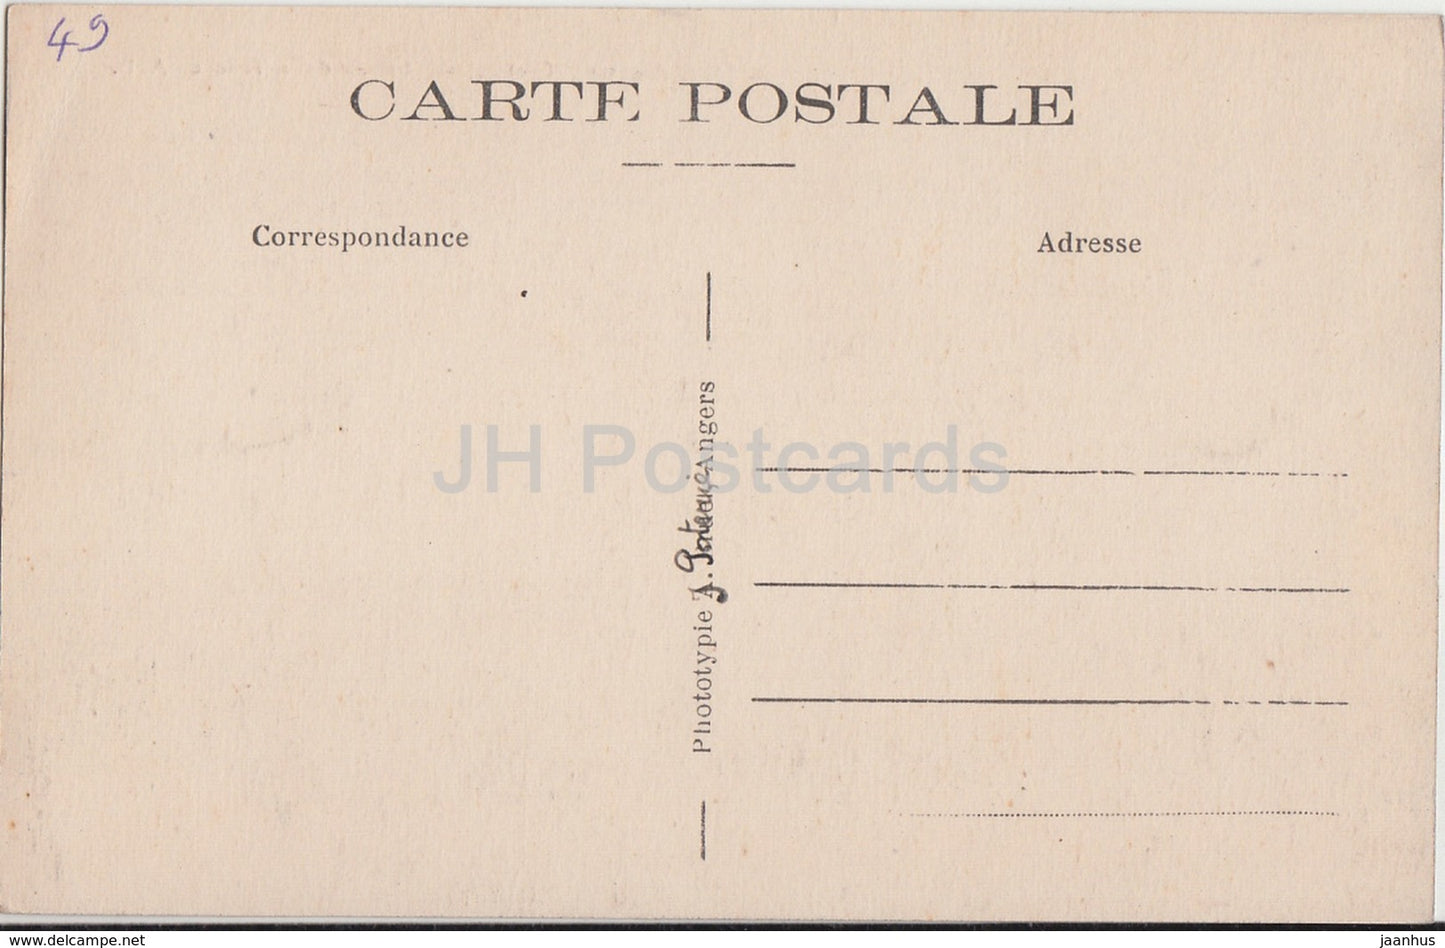 Mouliherne - Chateau de La Touche - Schloss - 3 - alte Postkarte - Frankreich - unbenutzt